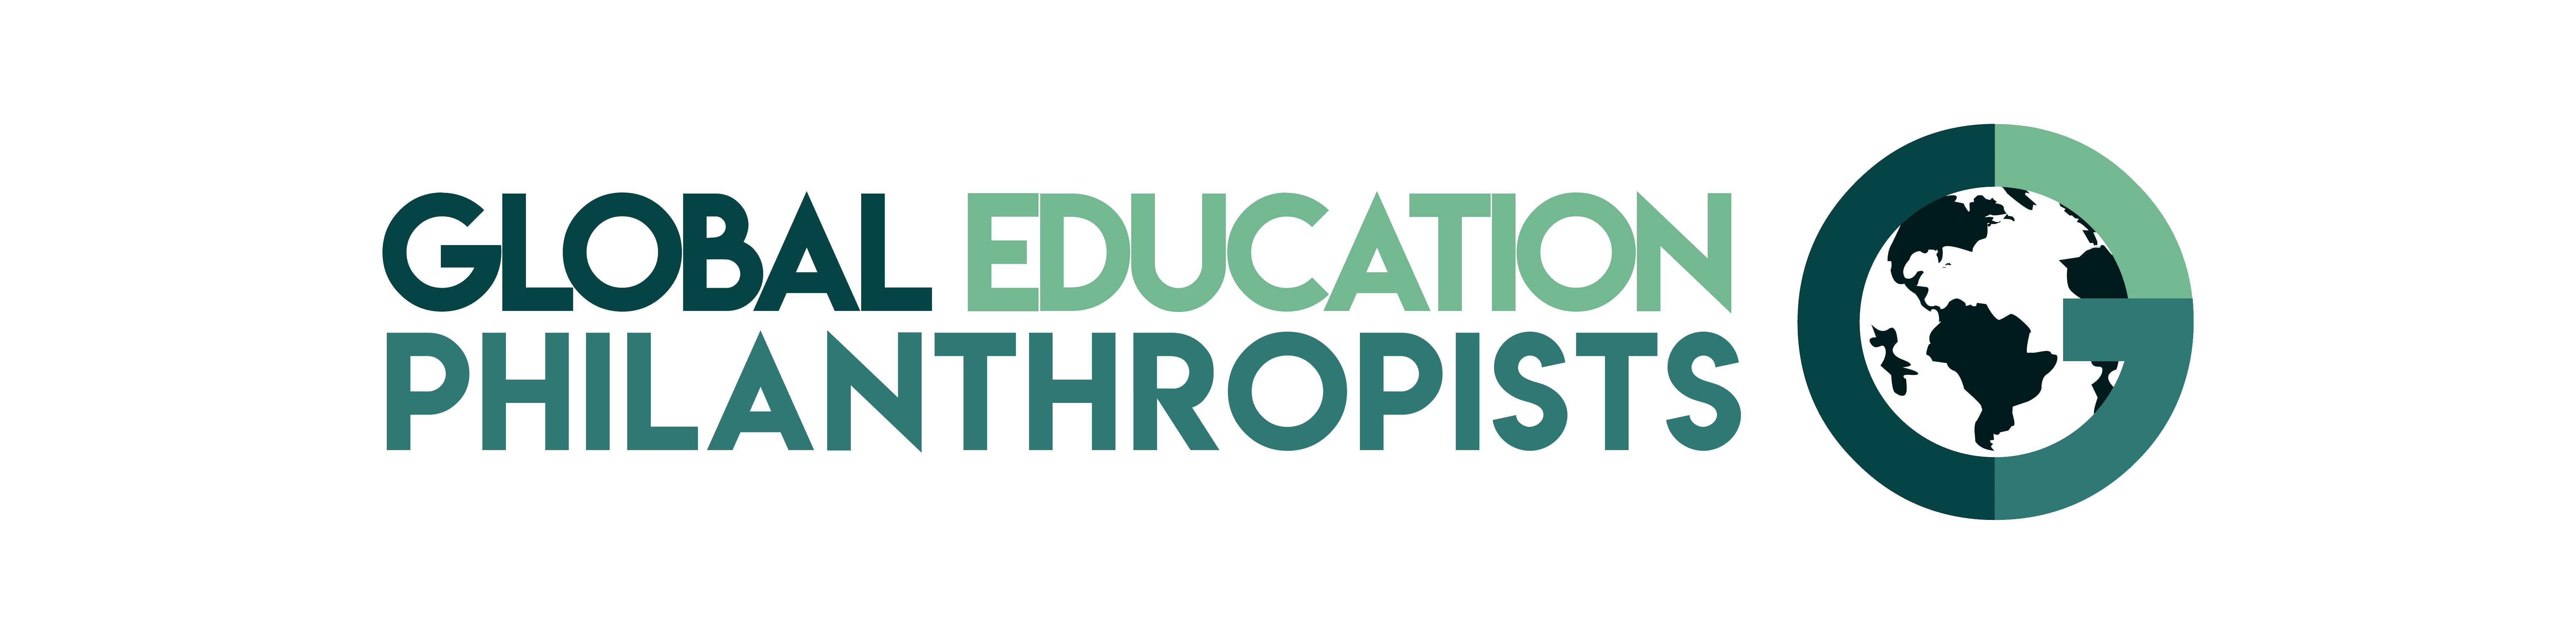 Global Education Philanthropists, Inc. logo